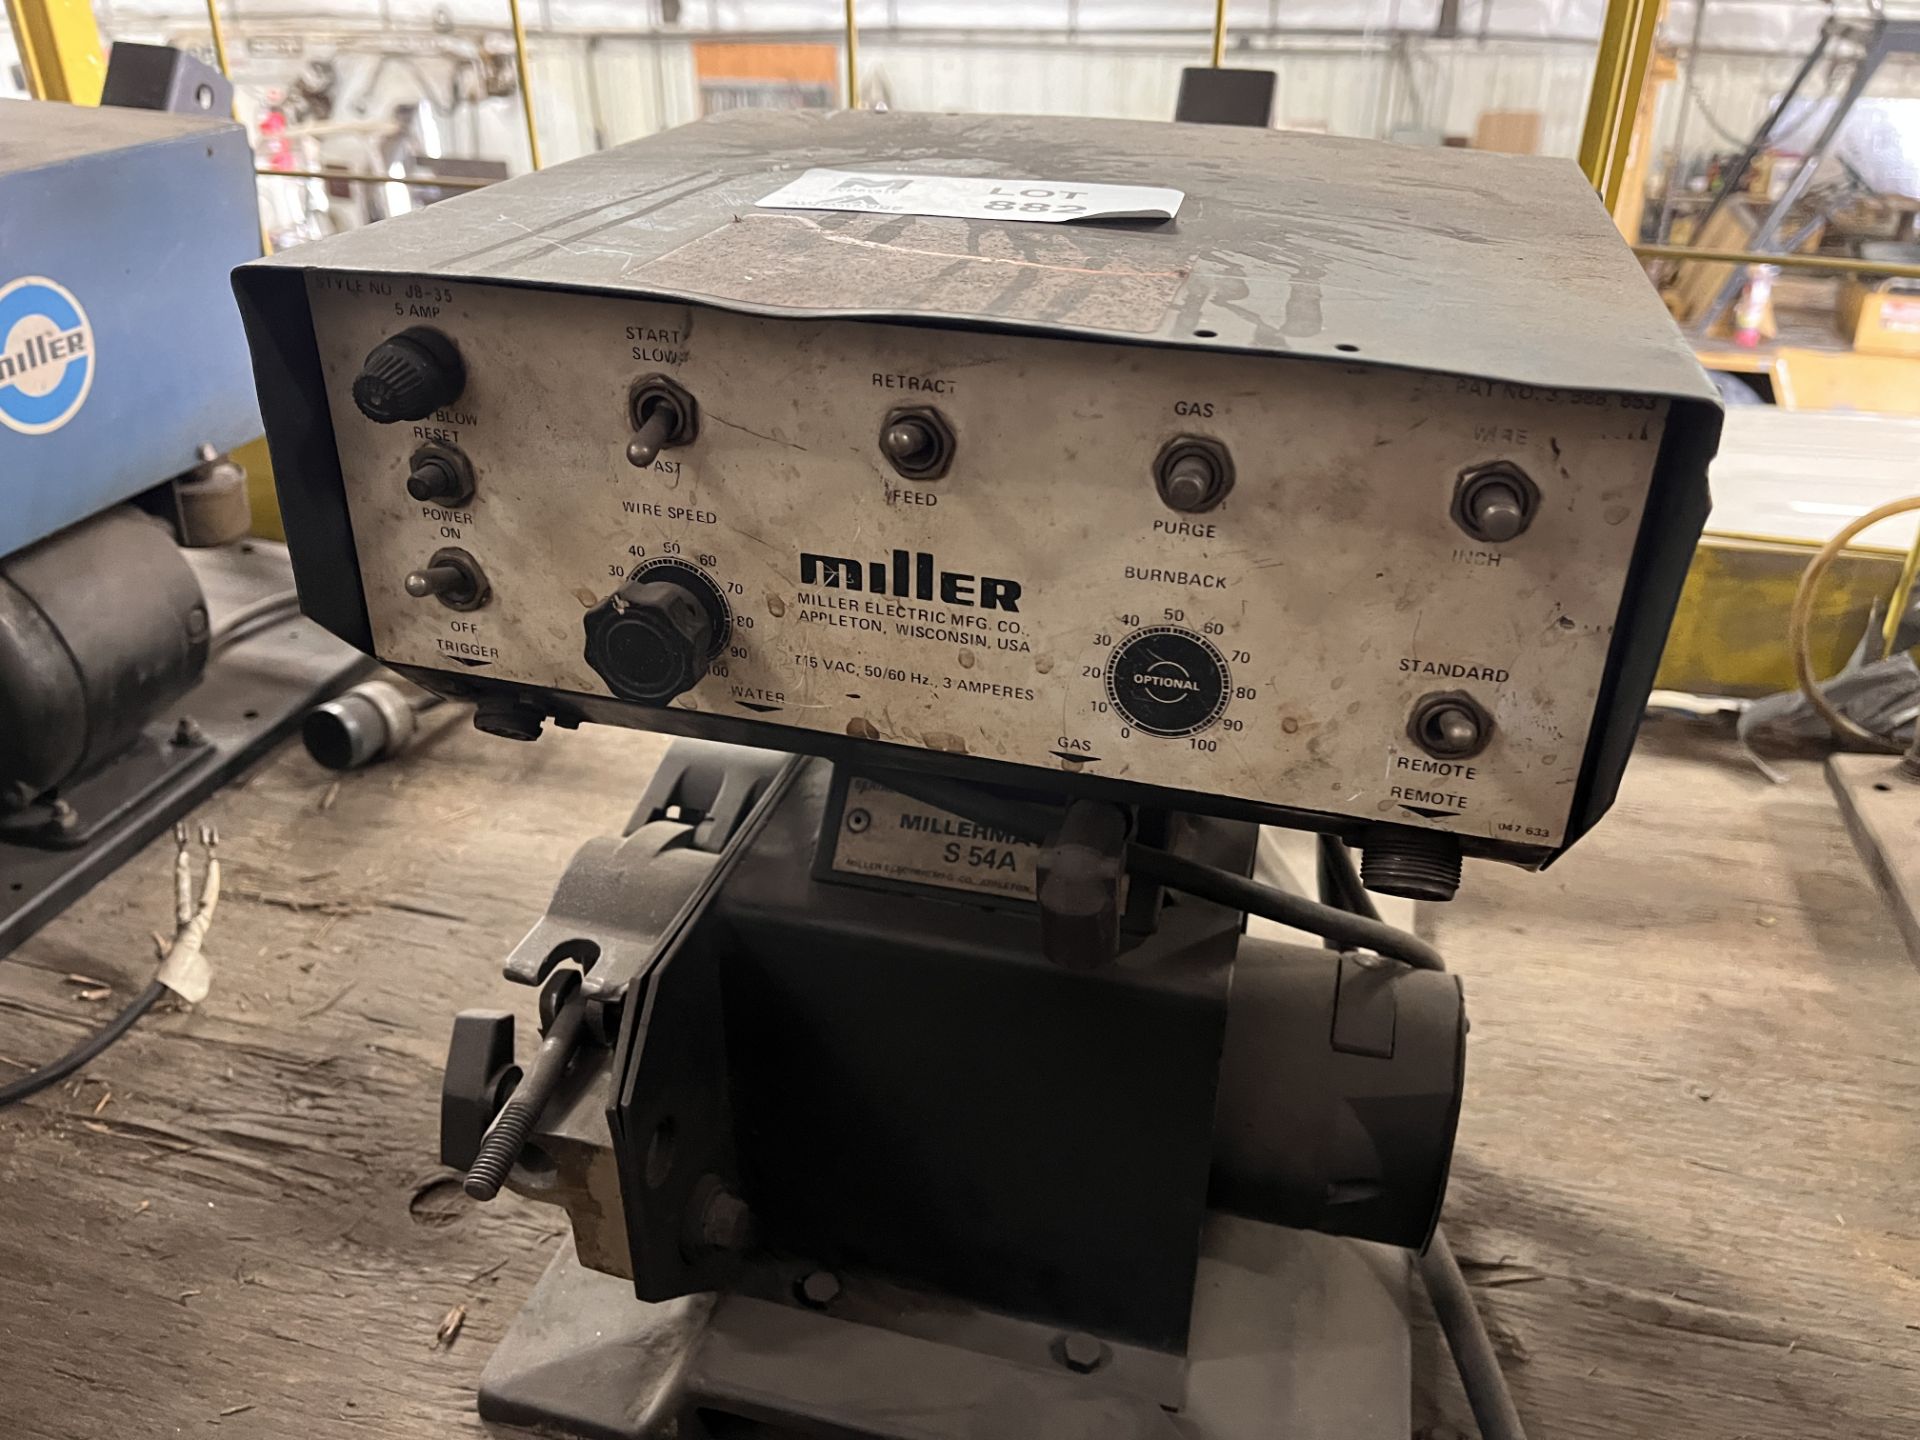 Miller Matic S54A Welder - Image 4 of 7